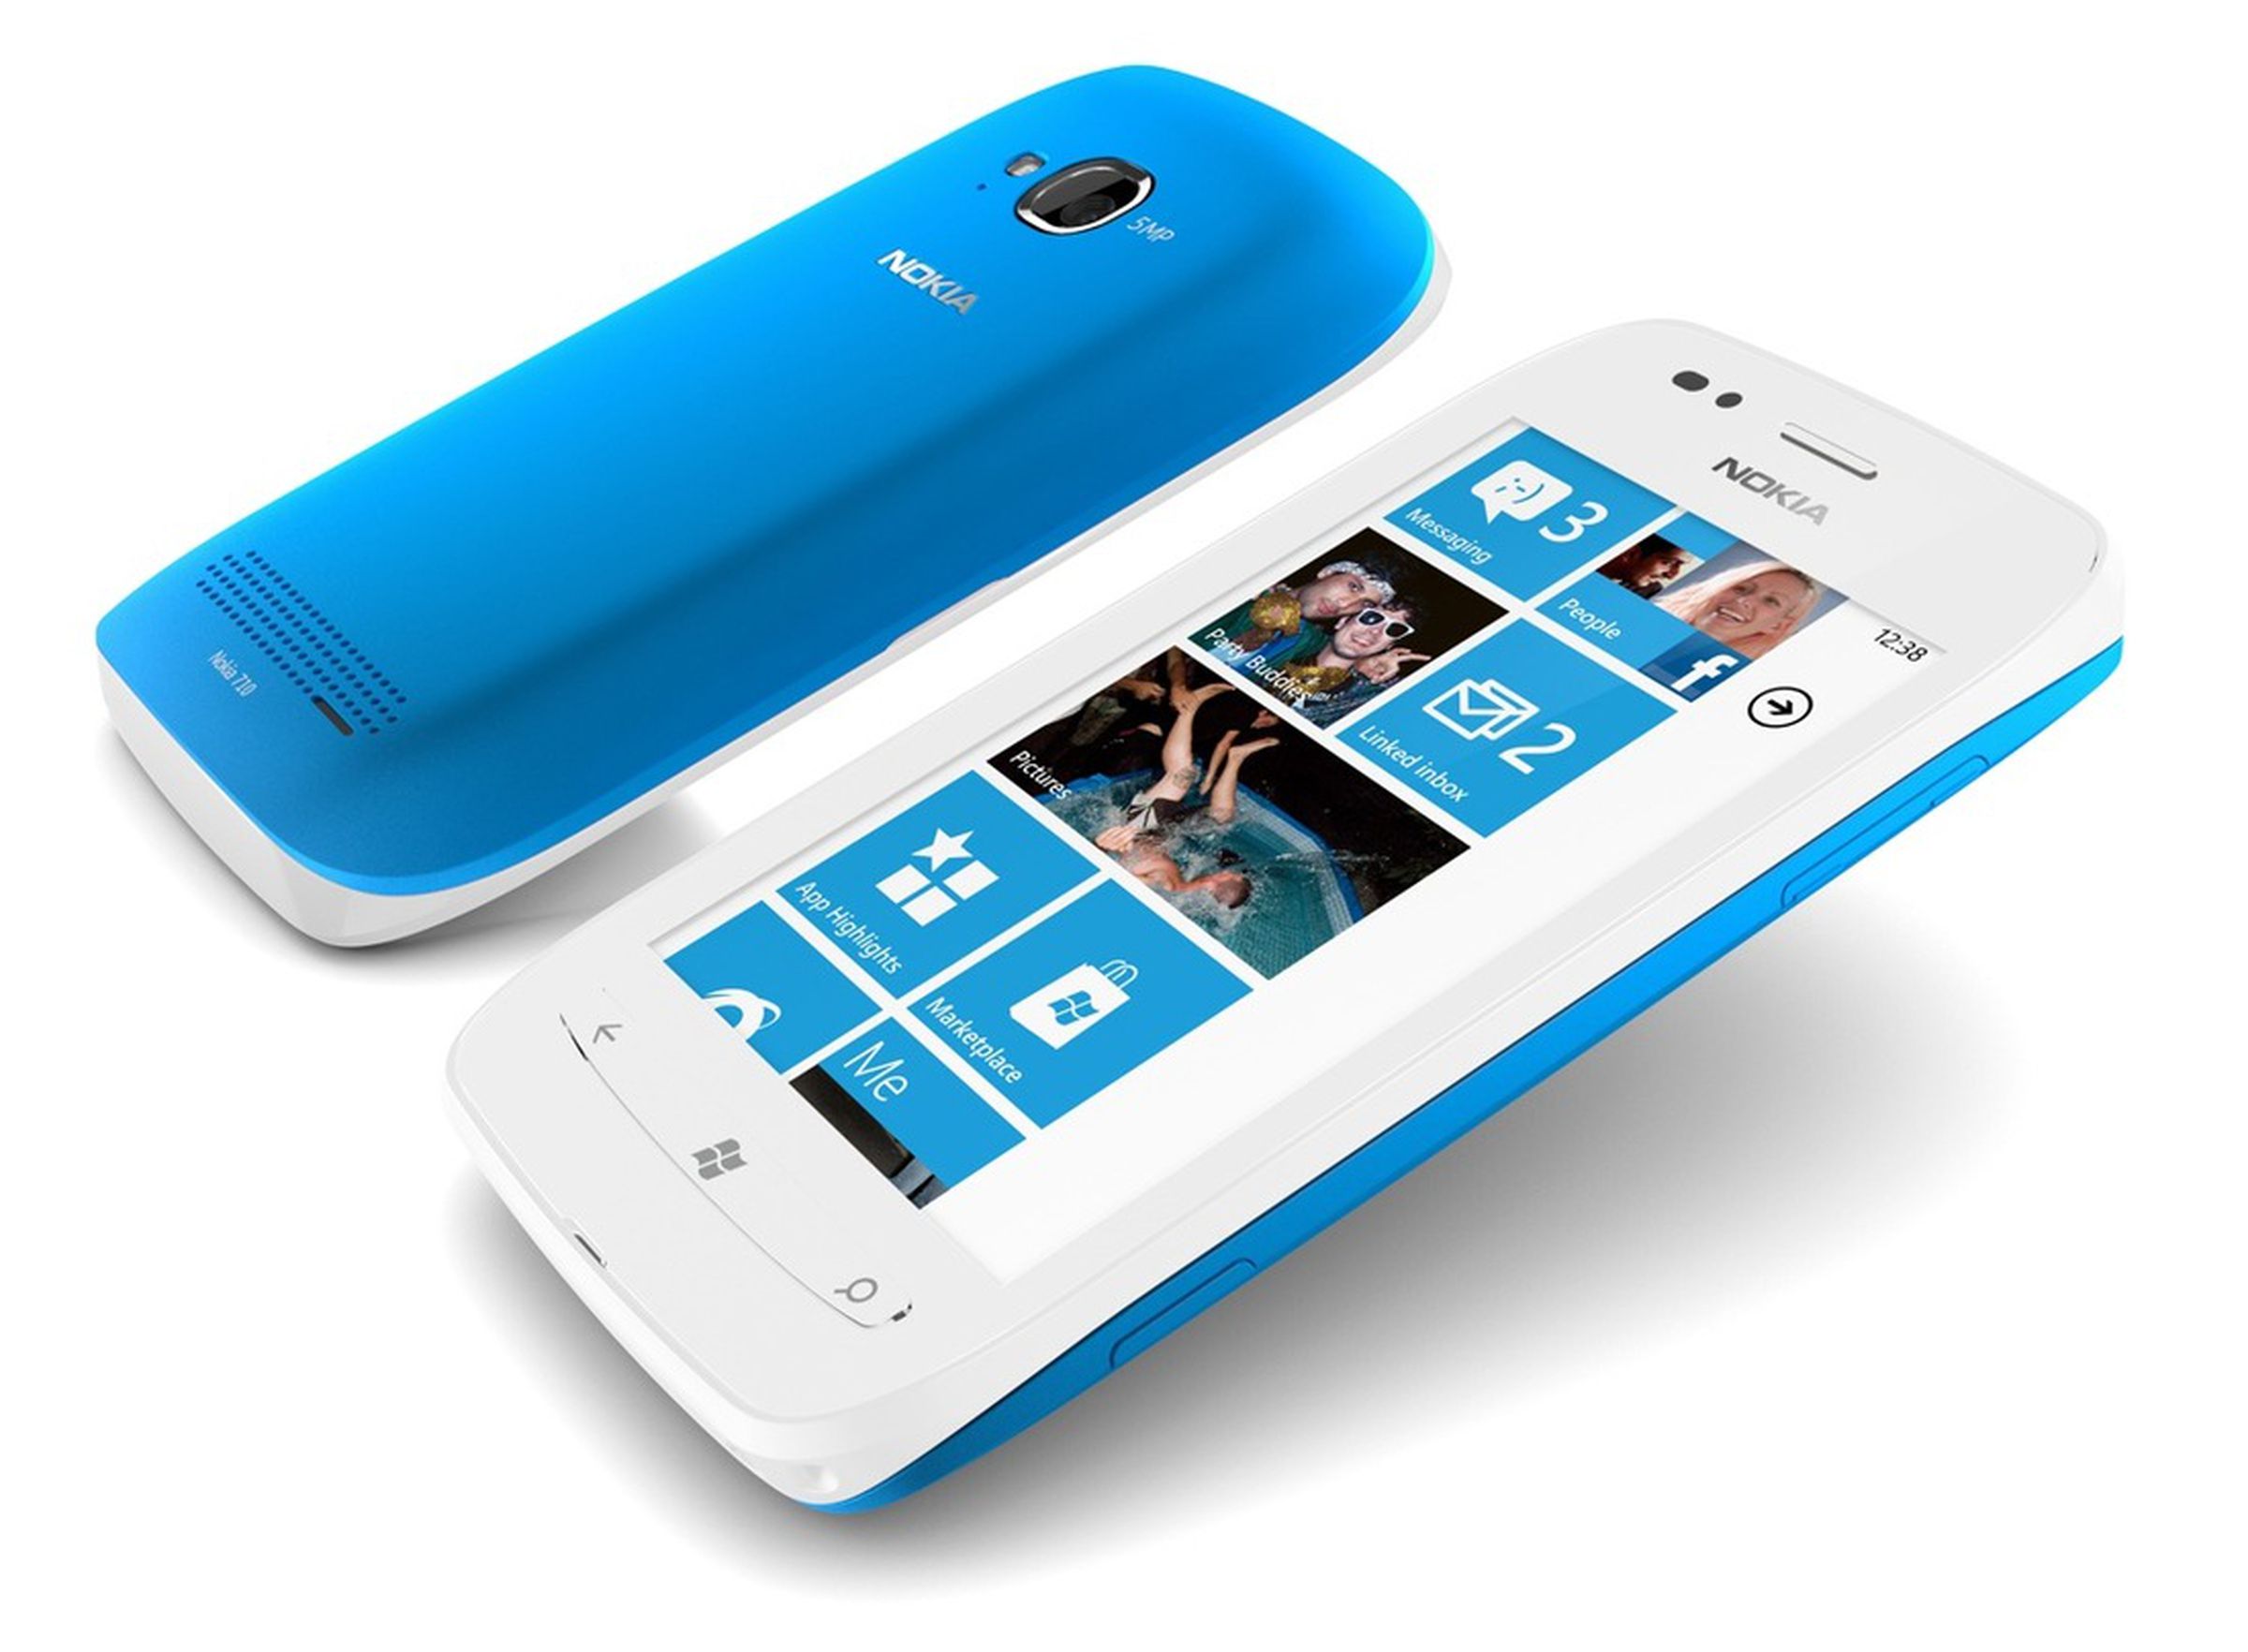 Nokia Lumia 710 Windows Phone official photos